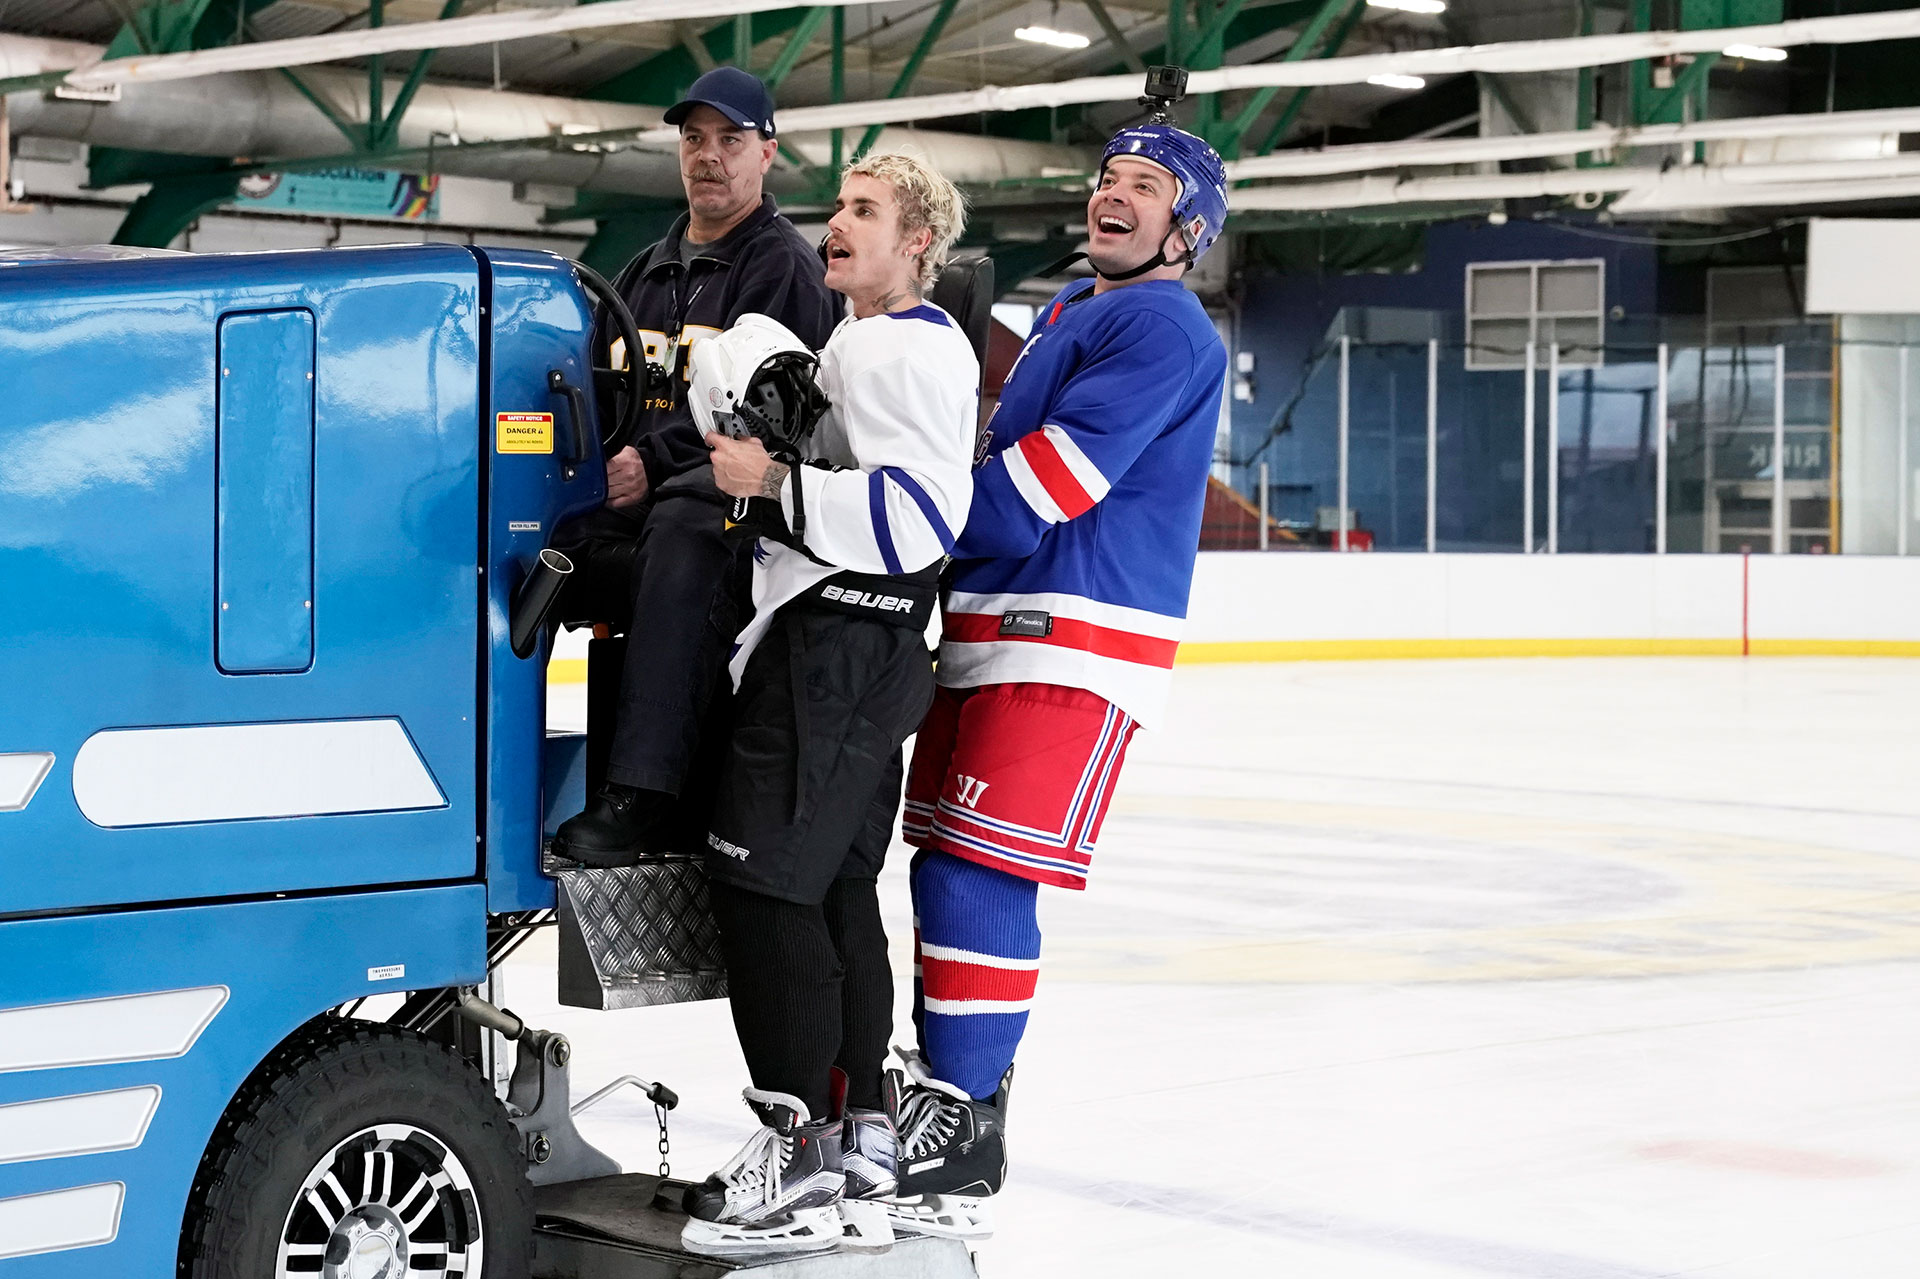 Justin Bieber slammed into glass in celebrity hockey game